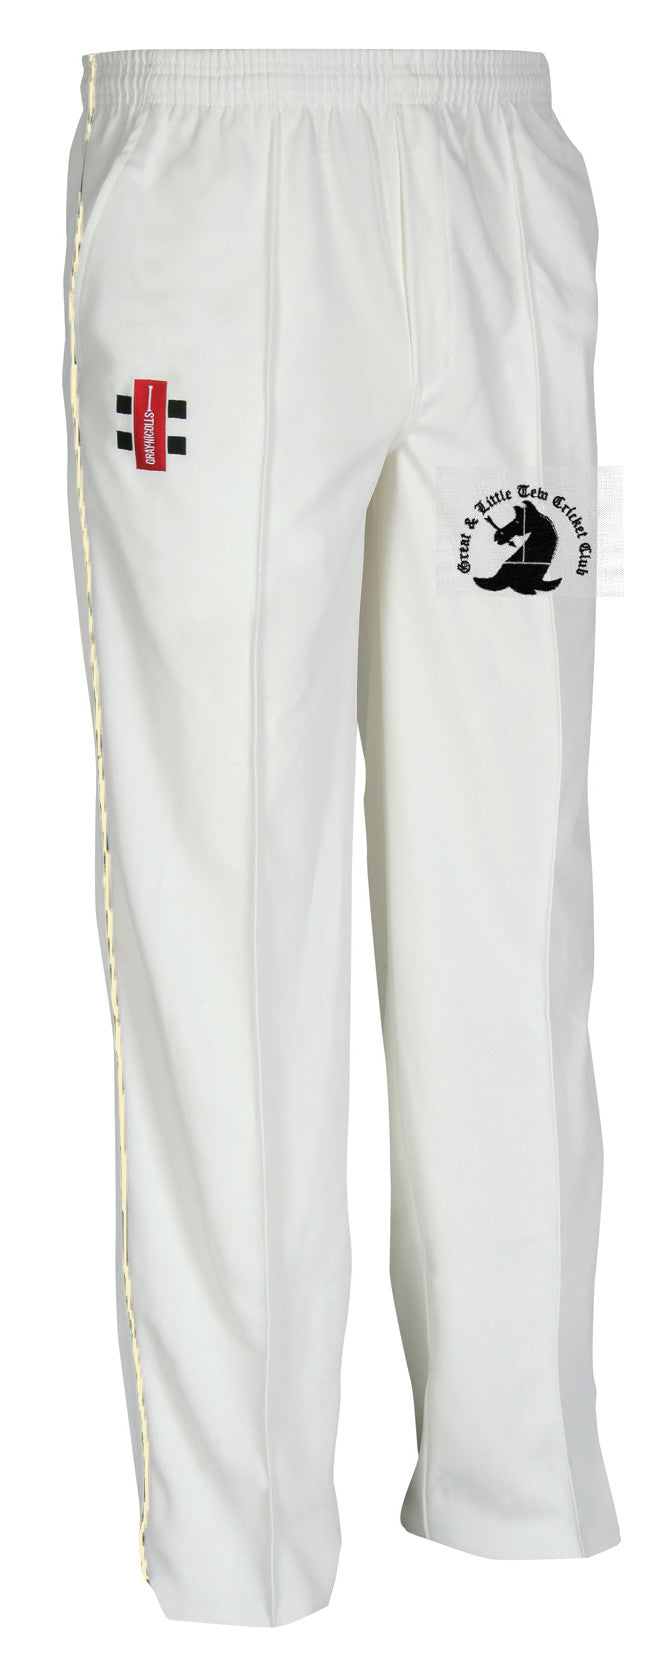 Great Tew CC Junior Matrix Cricket Trouser